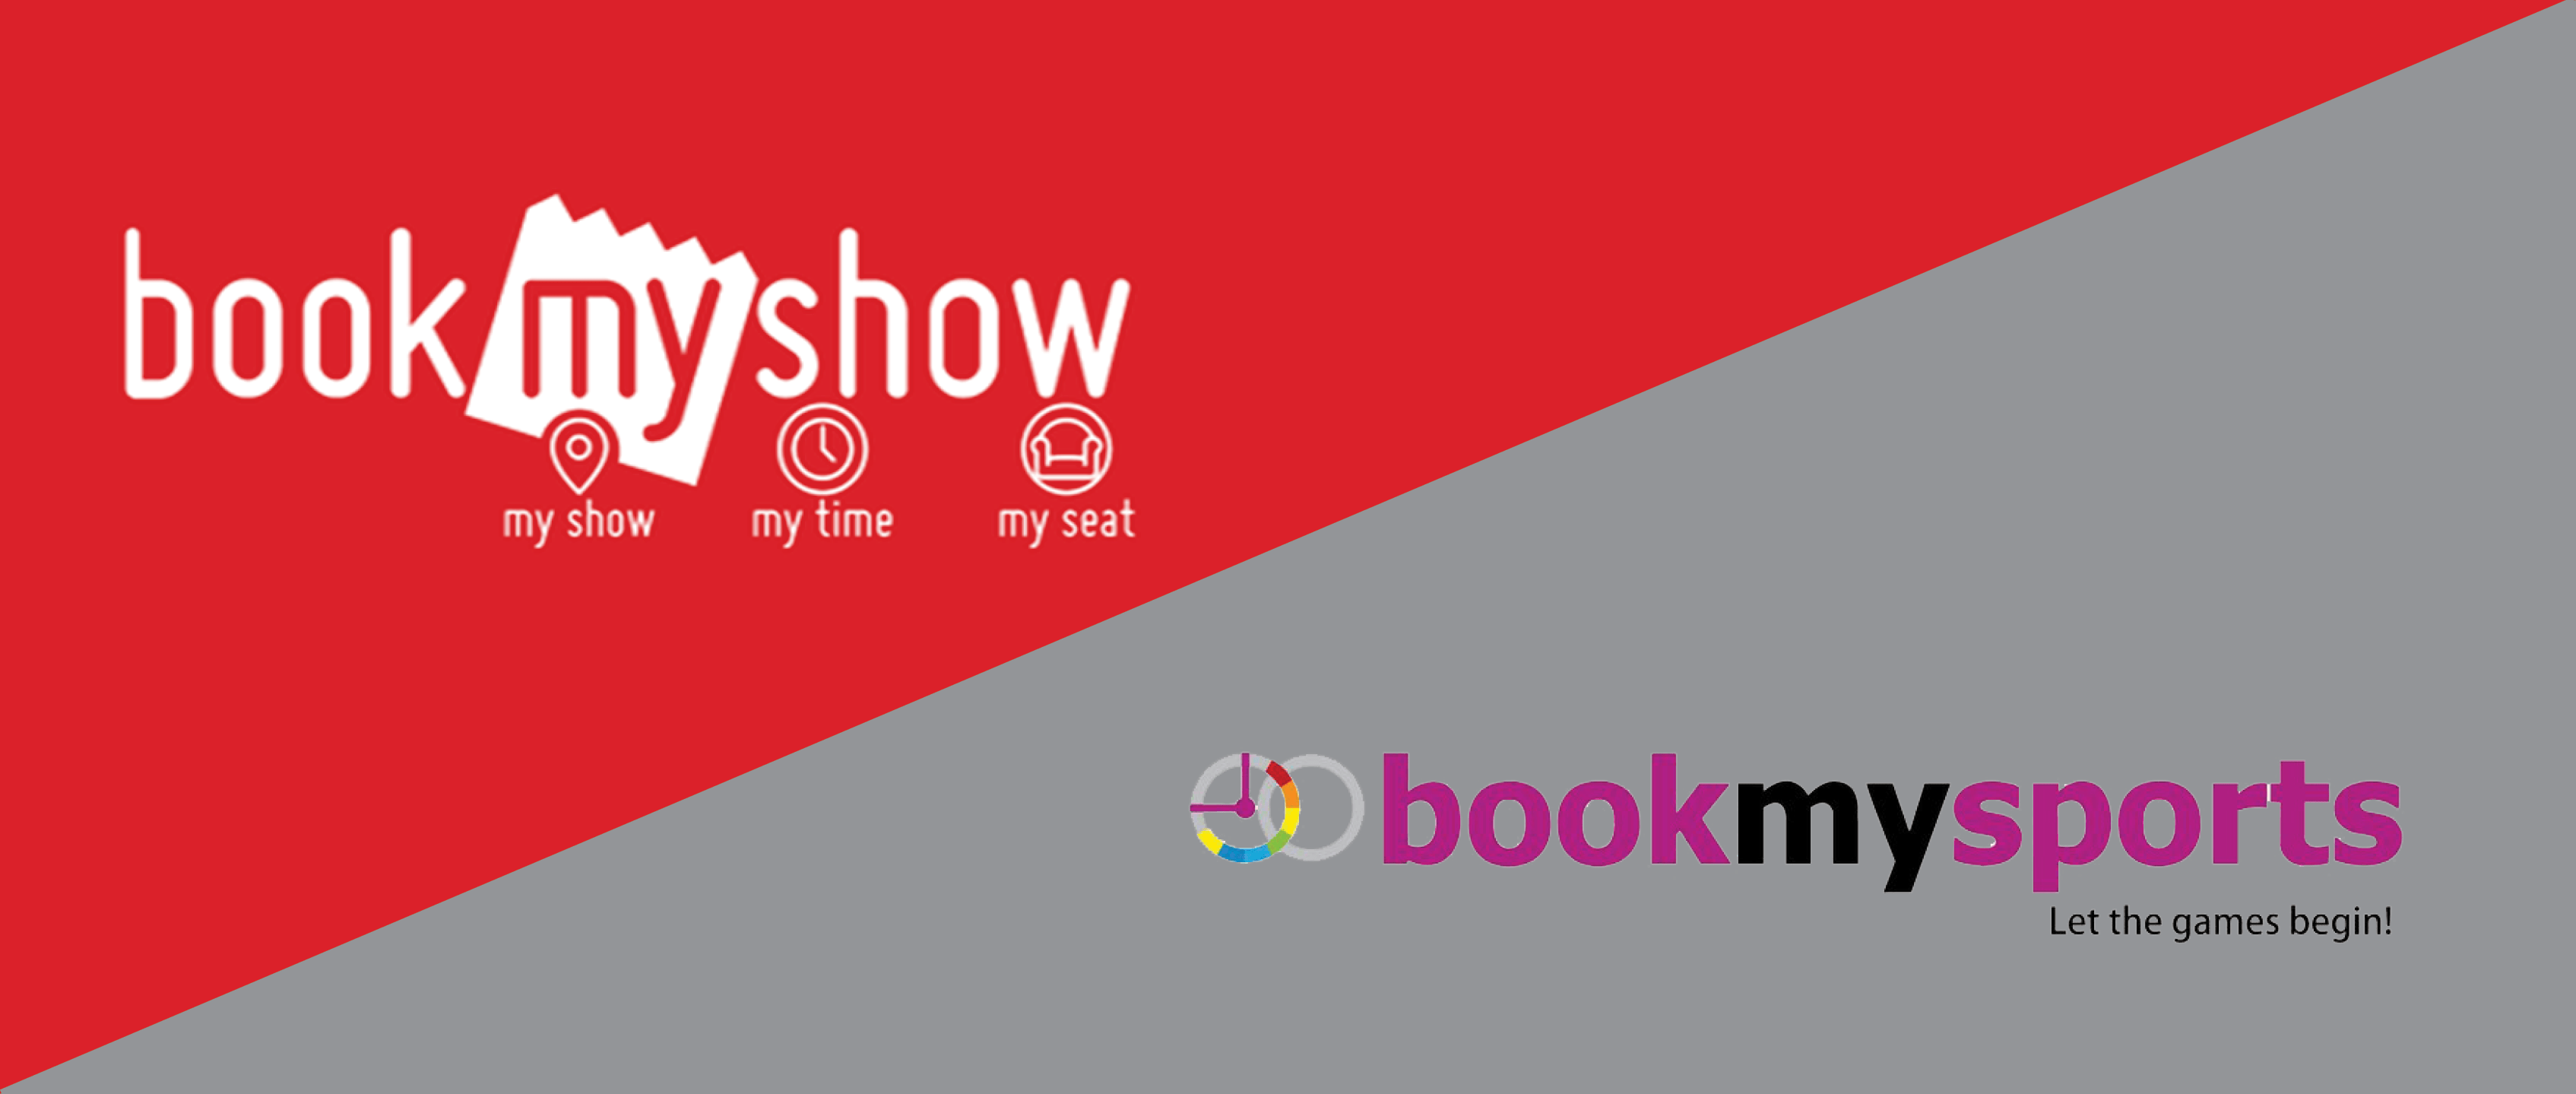 Bookmyshow Logo - BOOKMYSHOW vs. BOOKMYSPORTS - Obhan & Associates